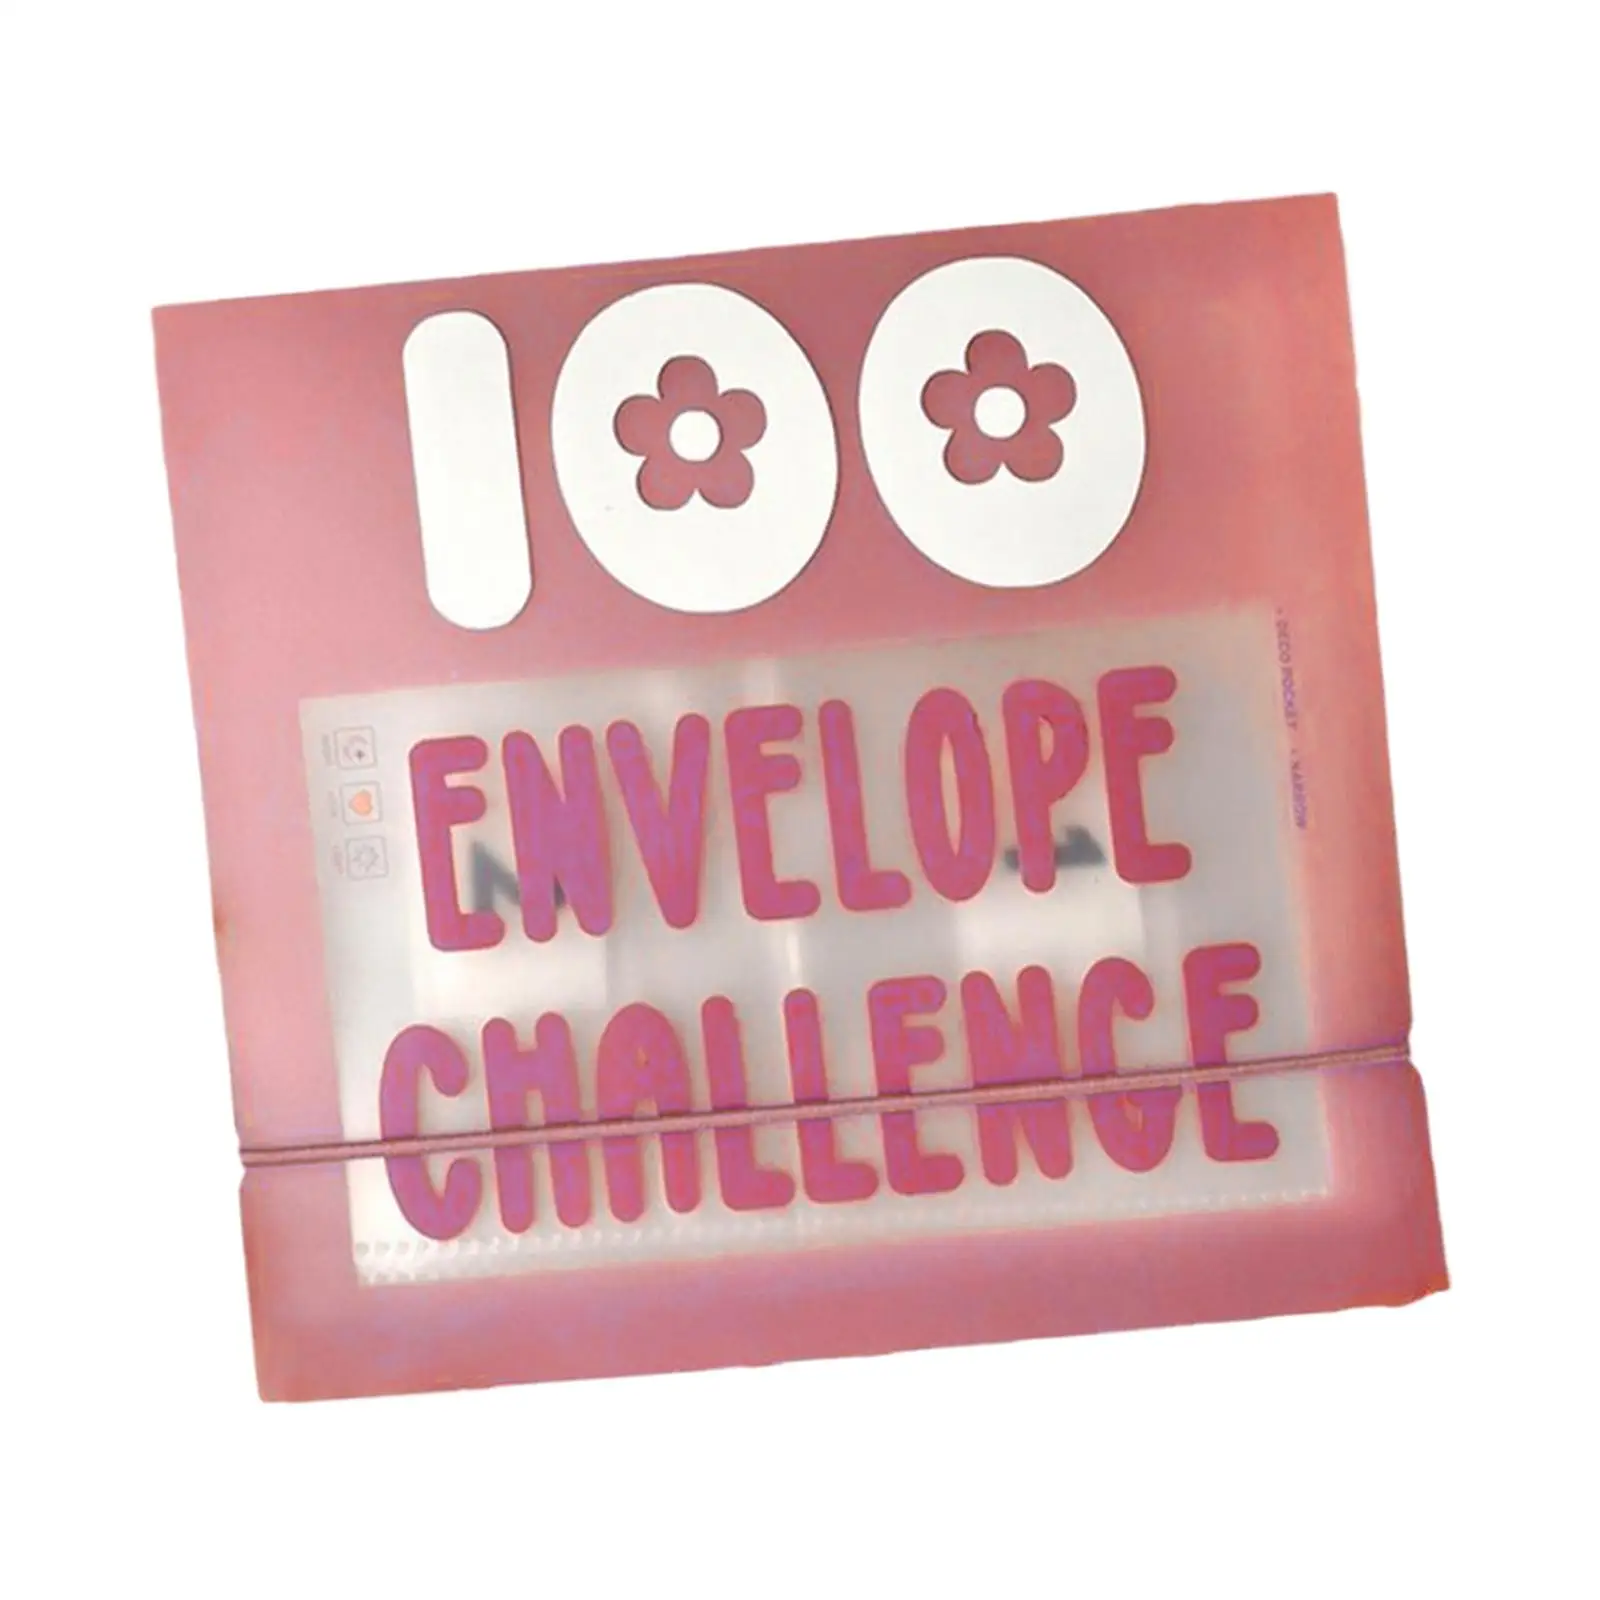 100 Envelope Challenge Binder Creative Funny Money Saving Envelopes Cash Stuffing Envelopes Binder for Challenging Saving Money